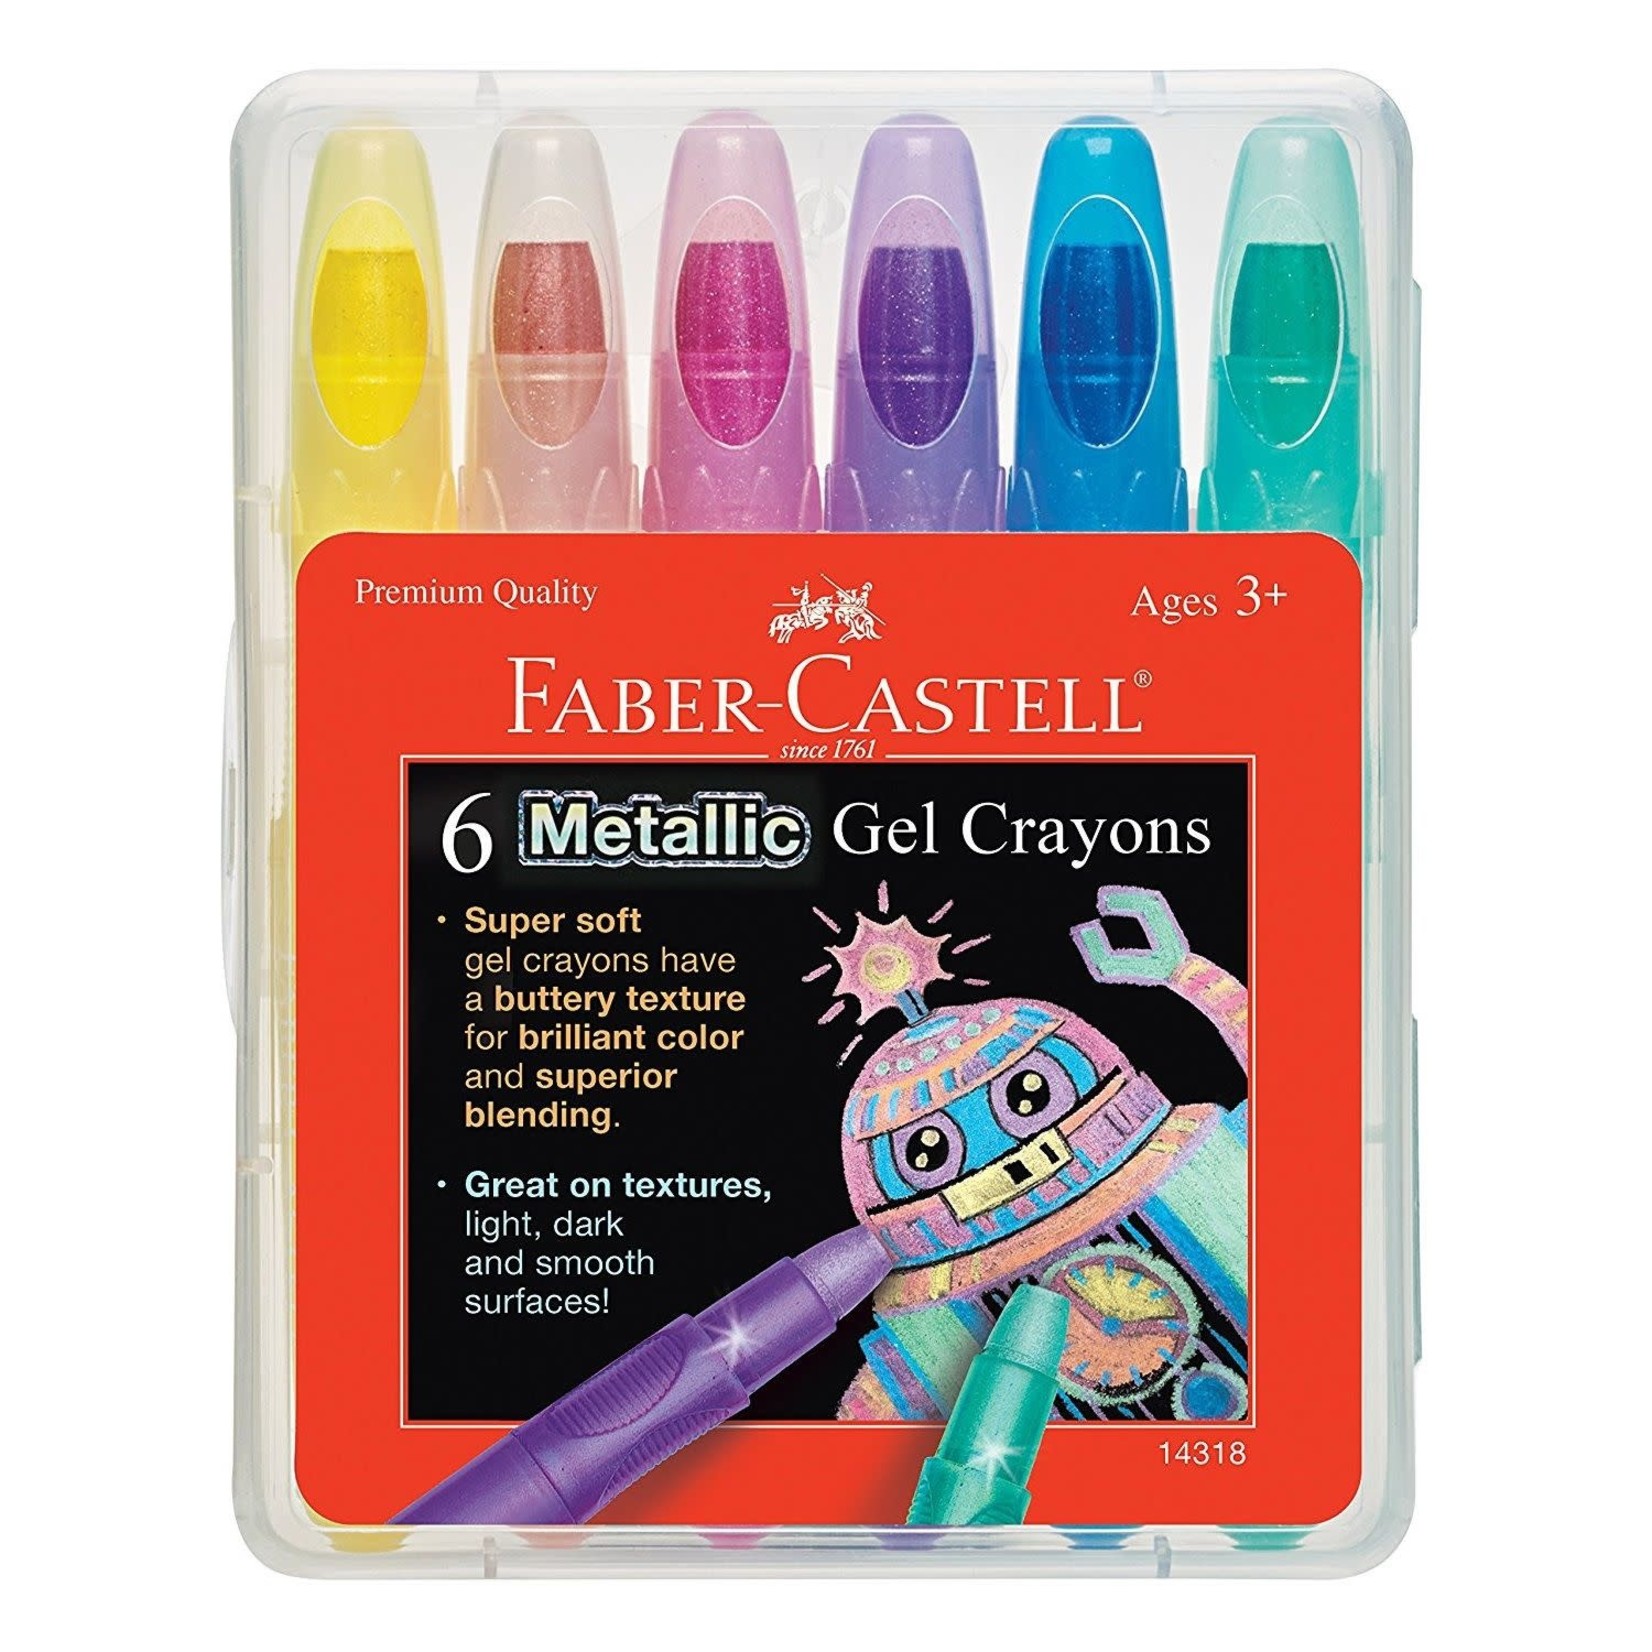 Faber-Castell Metallic Gel Crayons 6ct